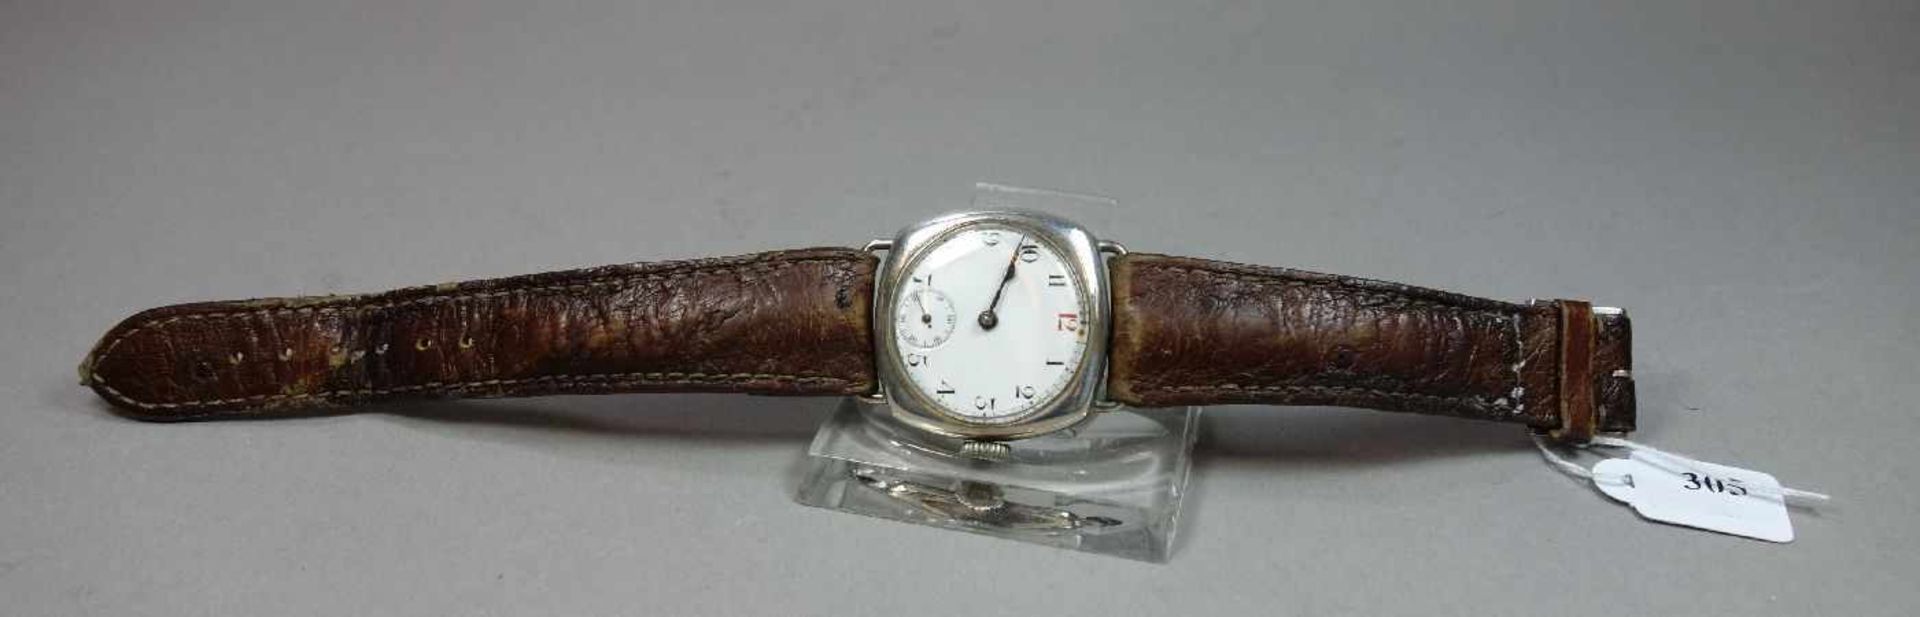 VINTAGE ARMBANDUHR OMEGA / wristwatch, Handaufzug, um 1920 / 1. H. 20. Jh., Manufaktur Omega Watch - Image 2 of 8